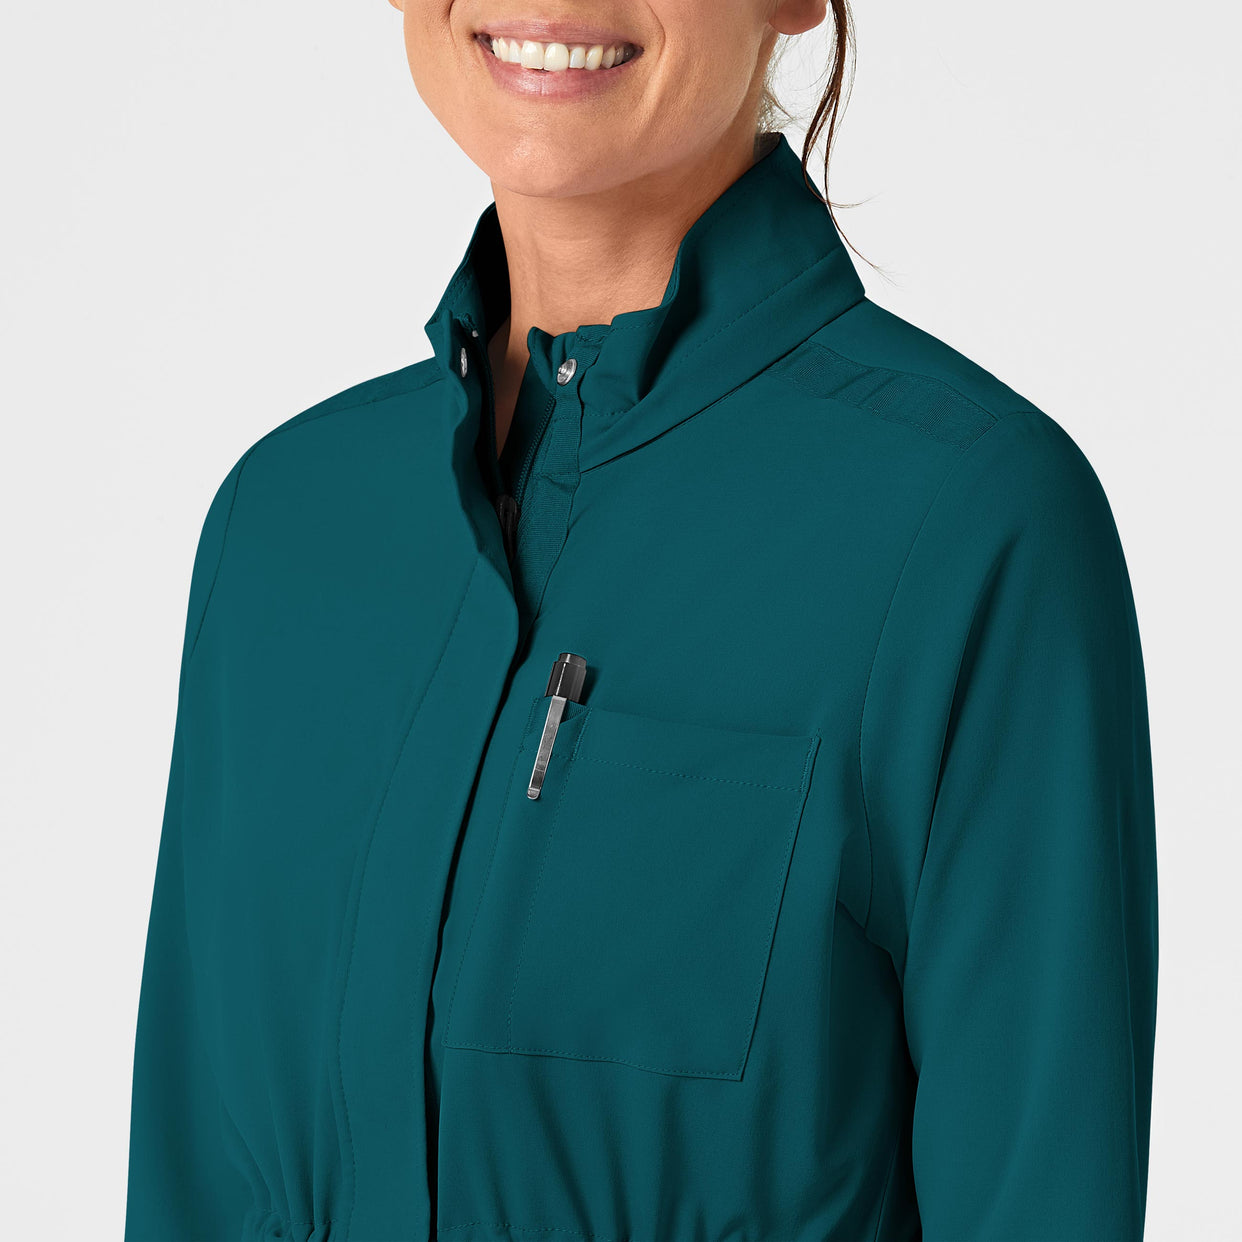 RENEW Women's Convertible Hood Fashion Jacket Caribbean Blue side detail 1